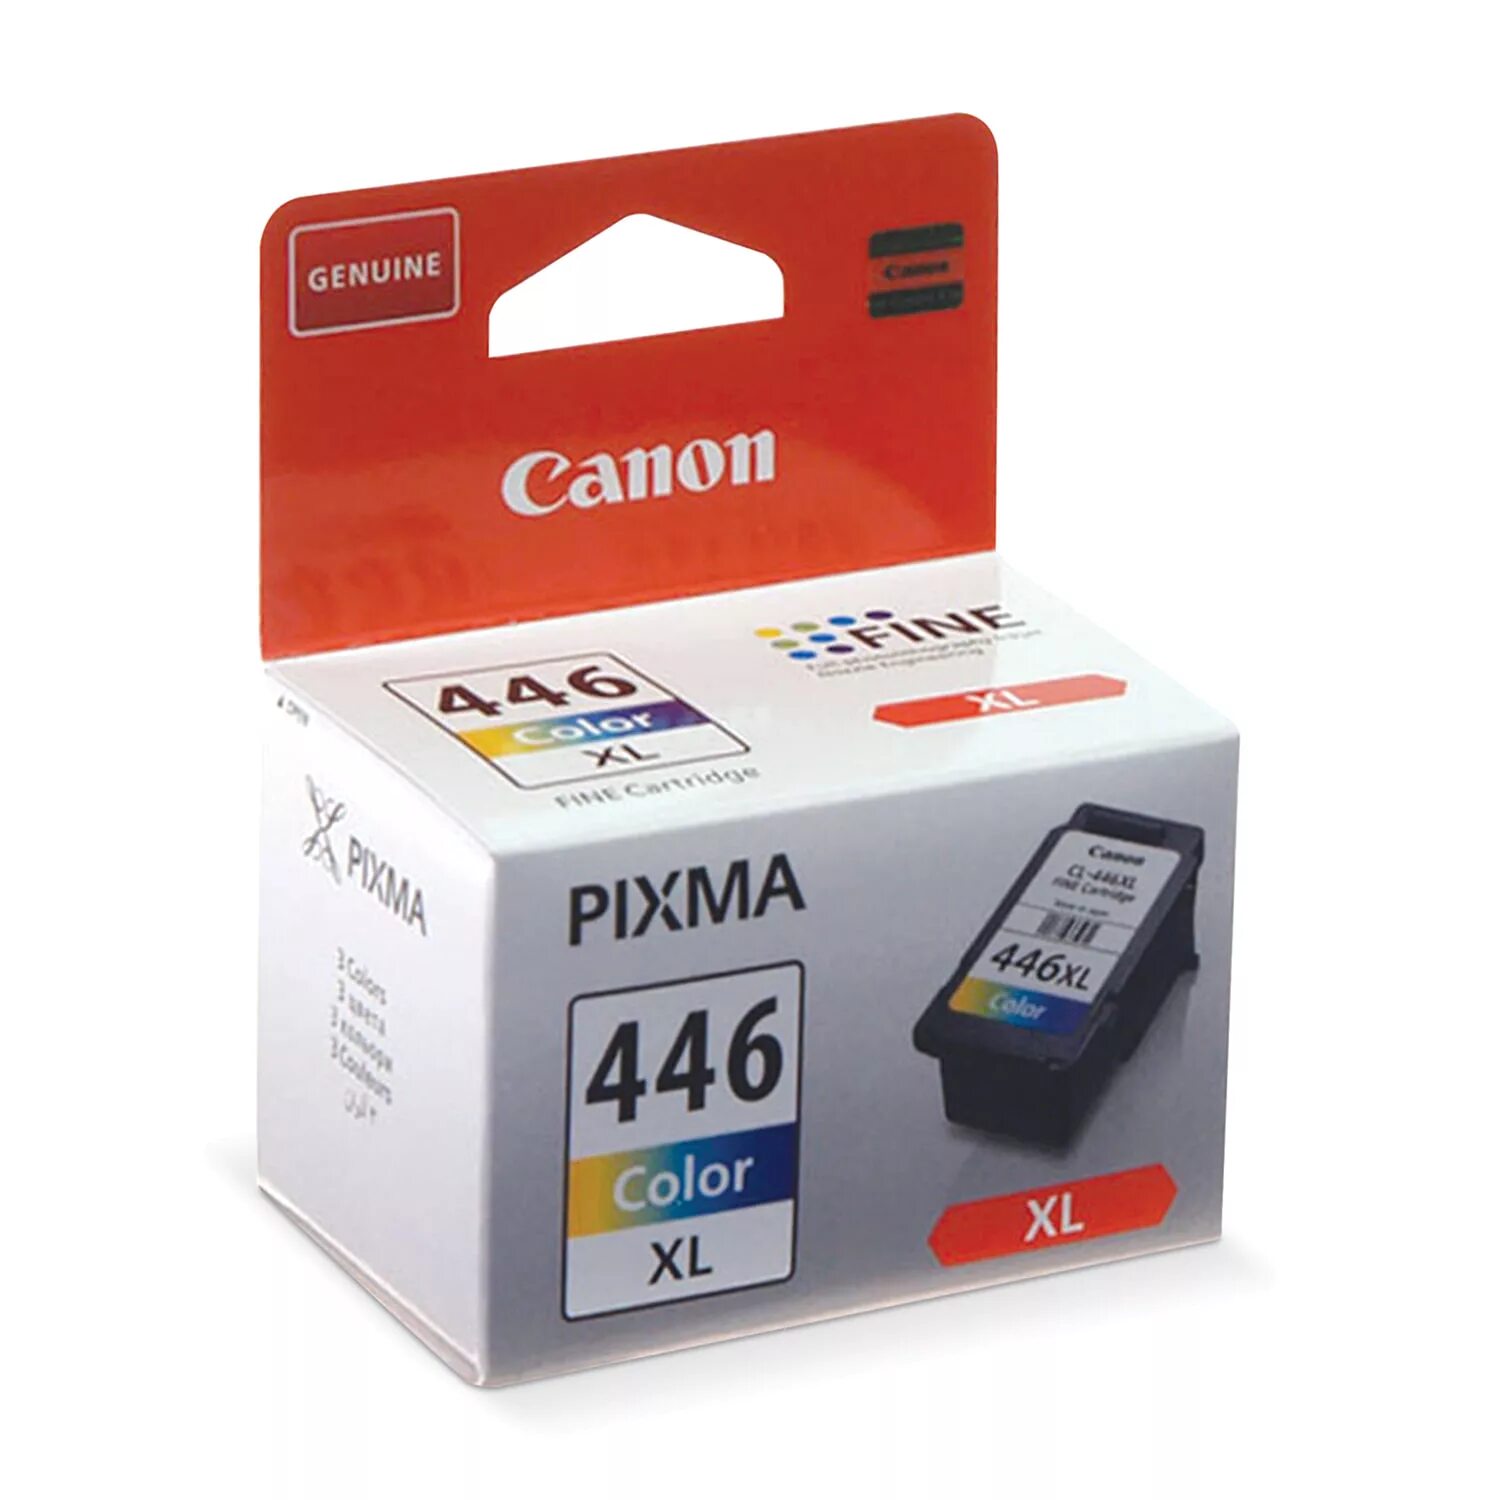 Canon pixma mg2440 картриджи. Canon CL-446 8285b001. Картридж Canon PG-445xl. Canon CL-446. Картридж для принтера Canon PIXMA 446.